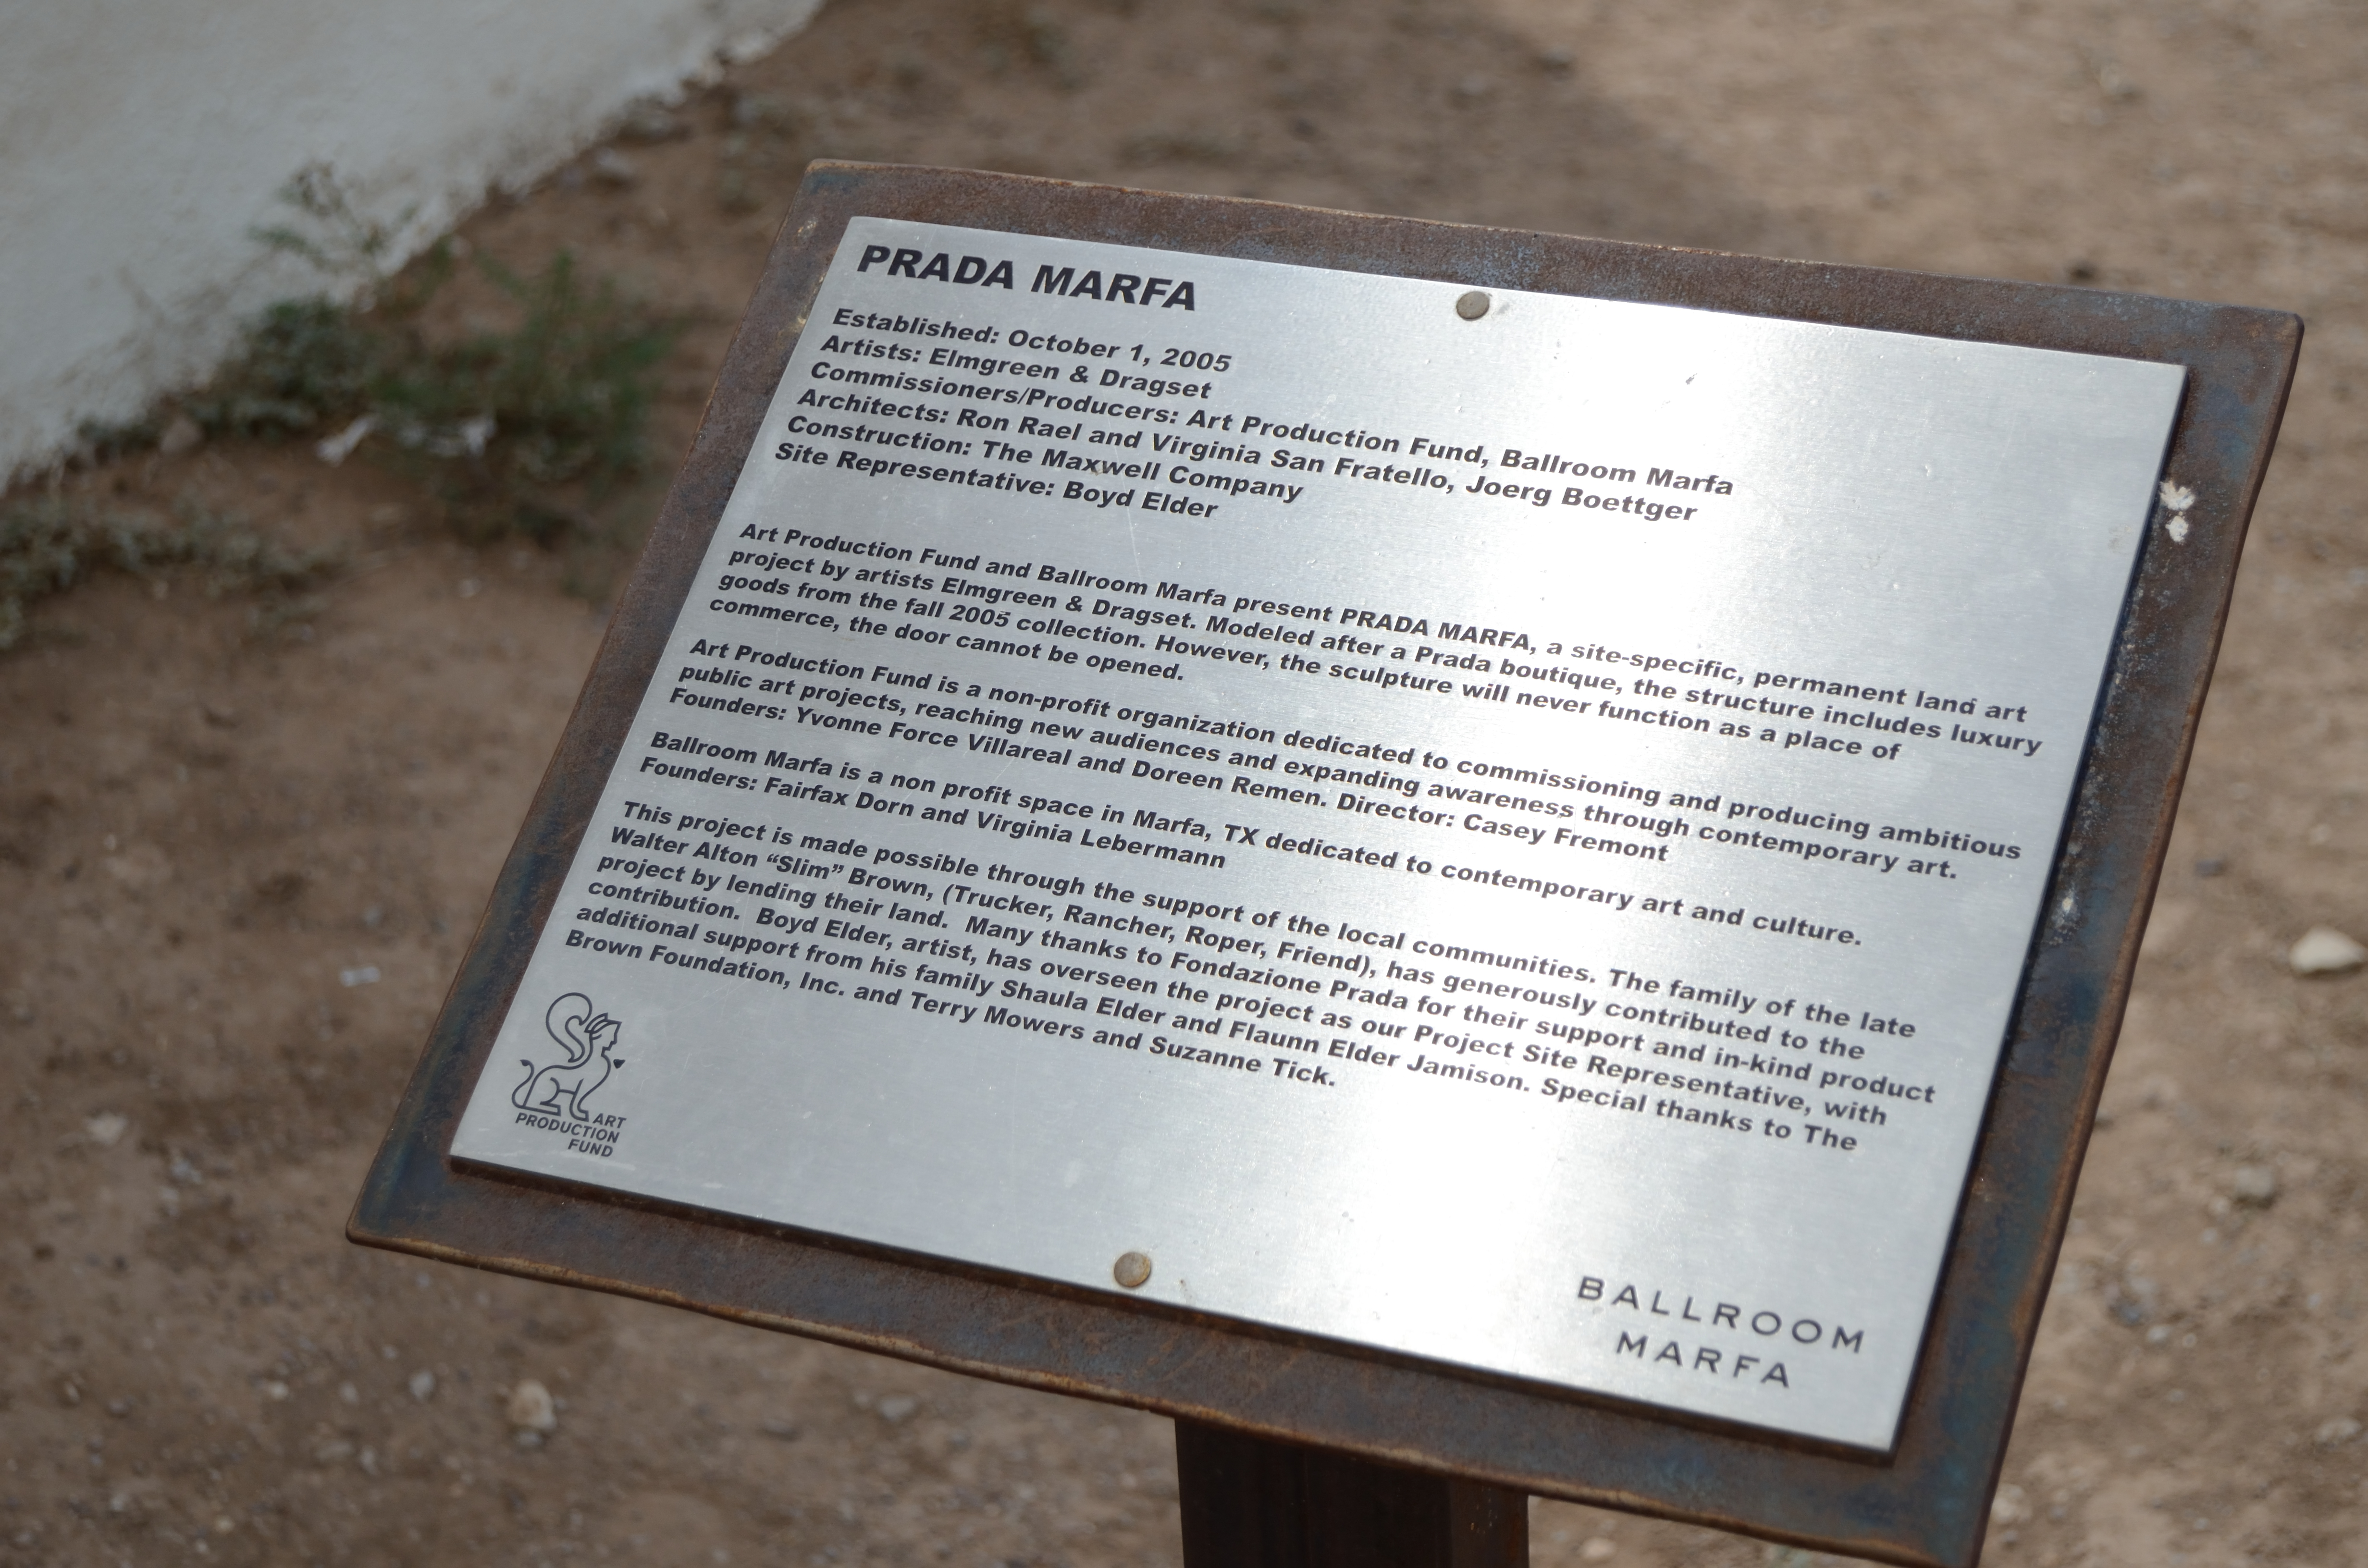 File:2015-09-06 Prada Marfa plaque.jpg - Wikimedia Commons